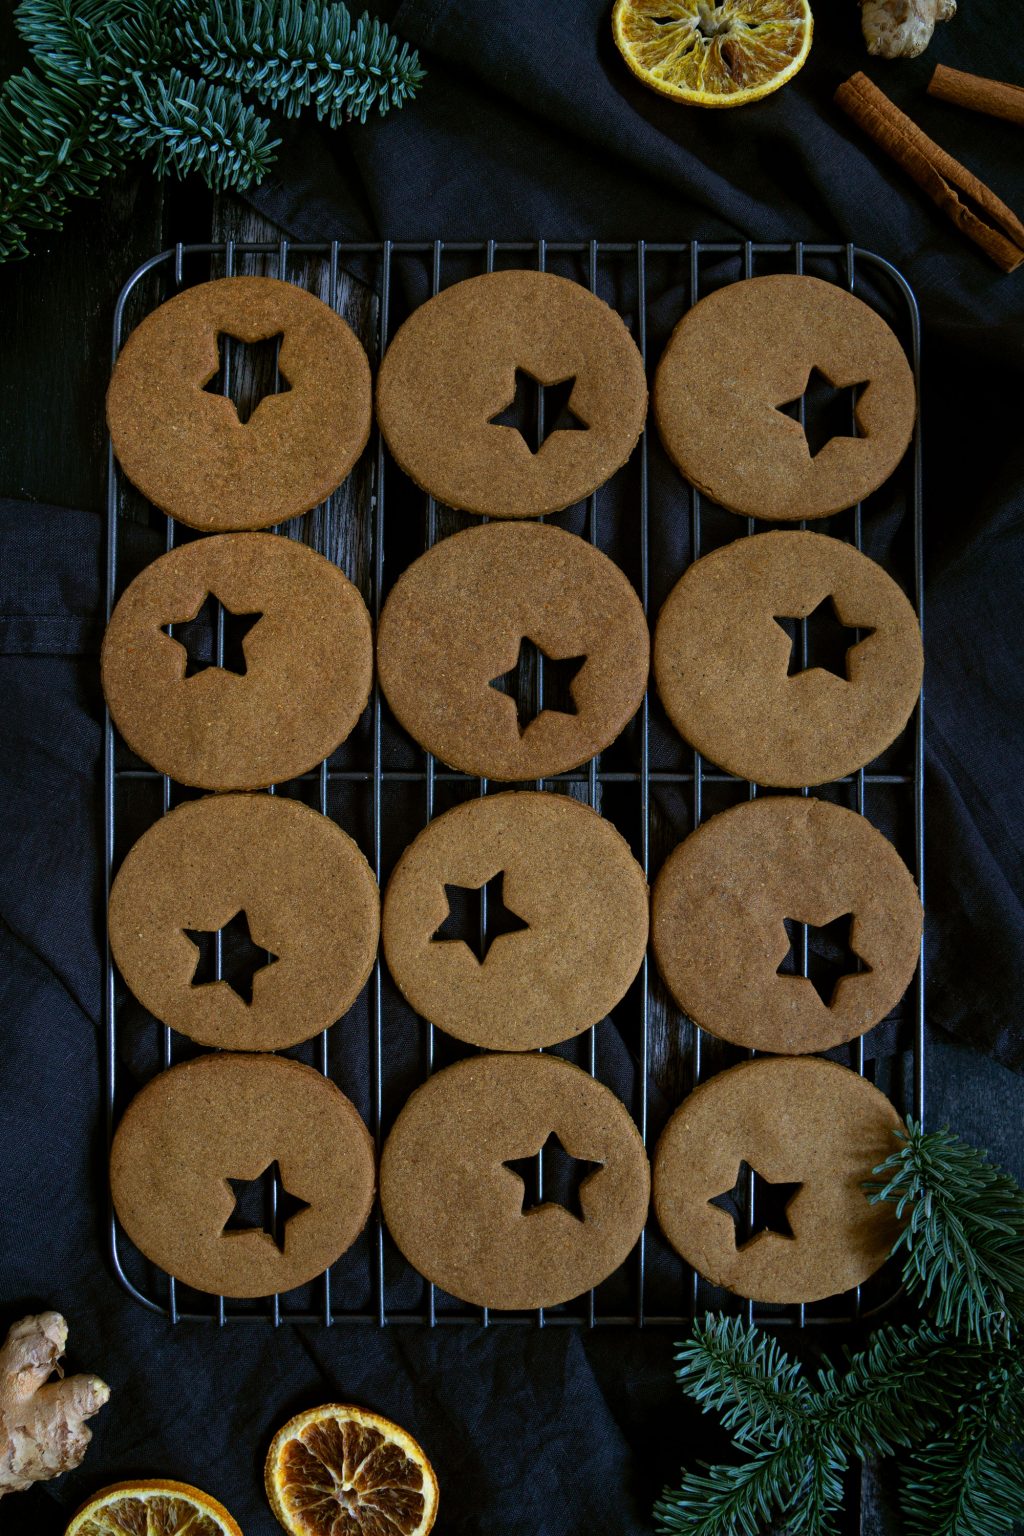 Crispy ginger cookies